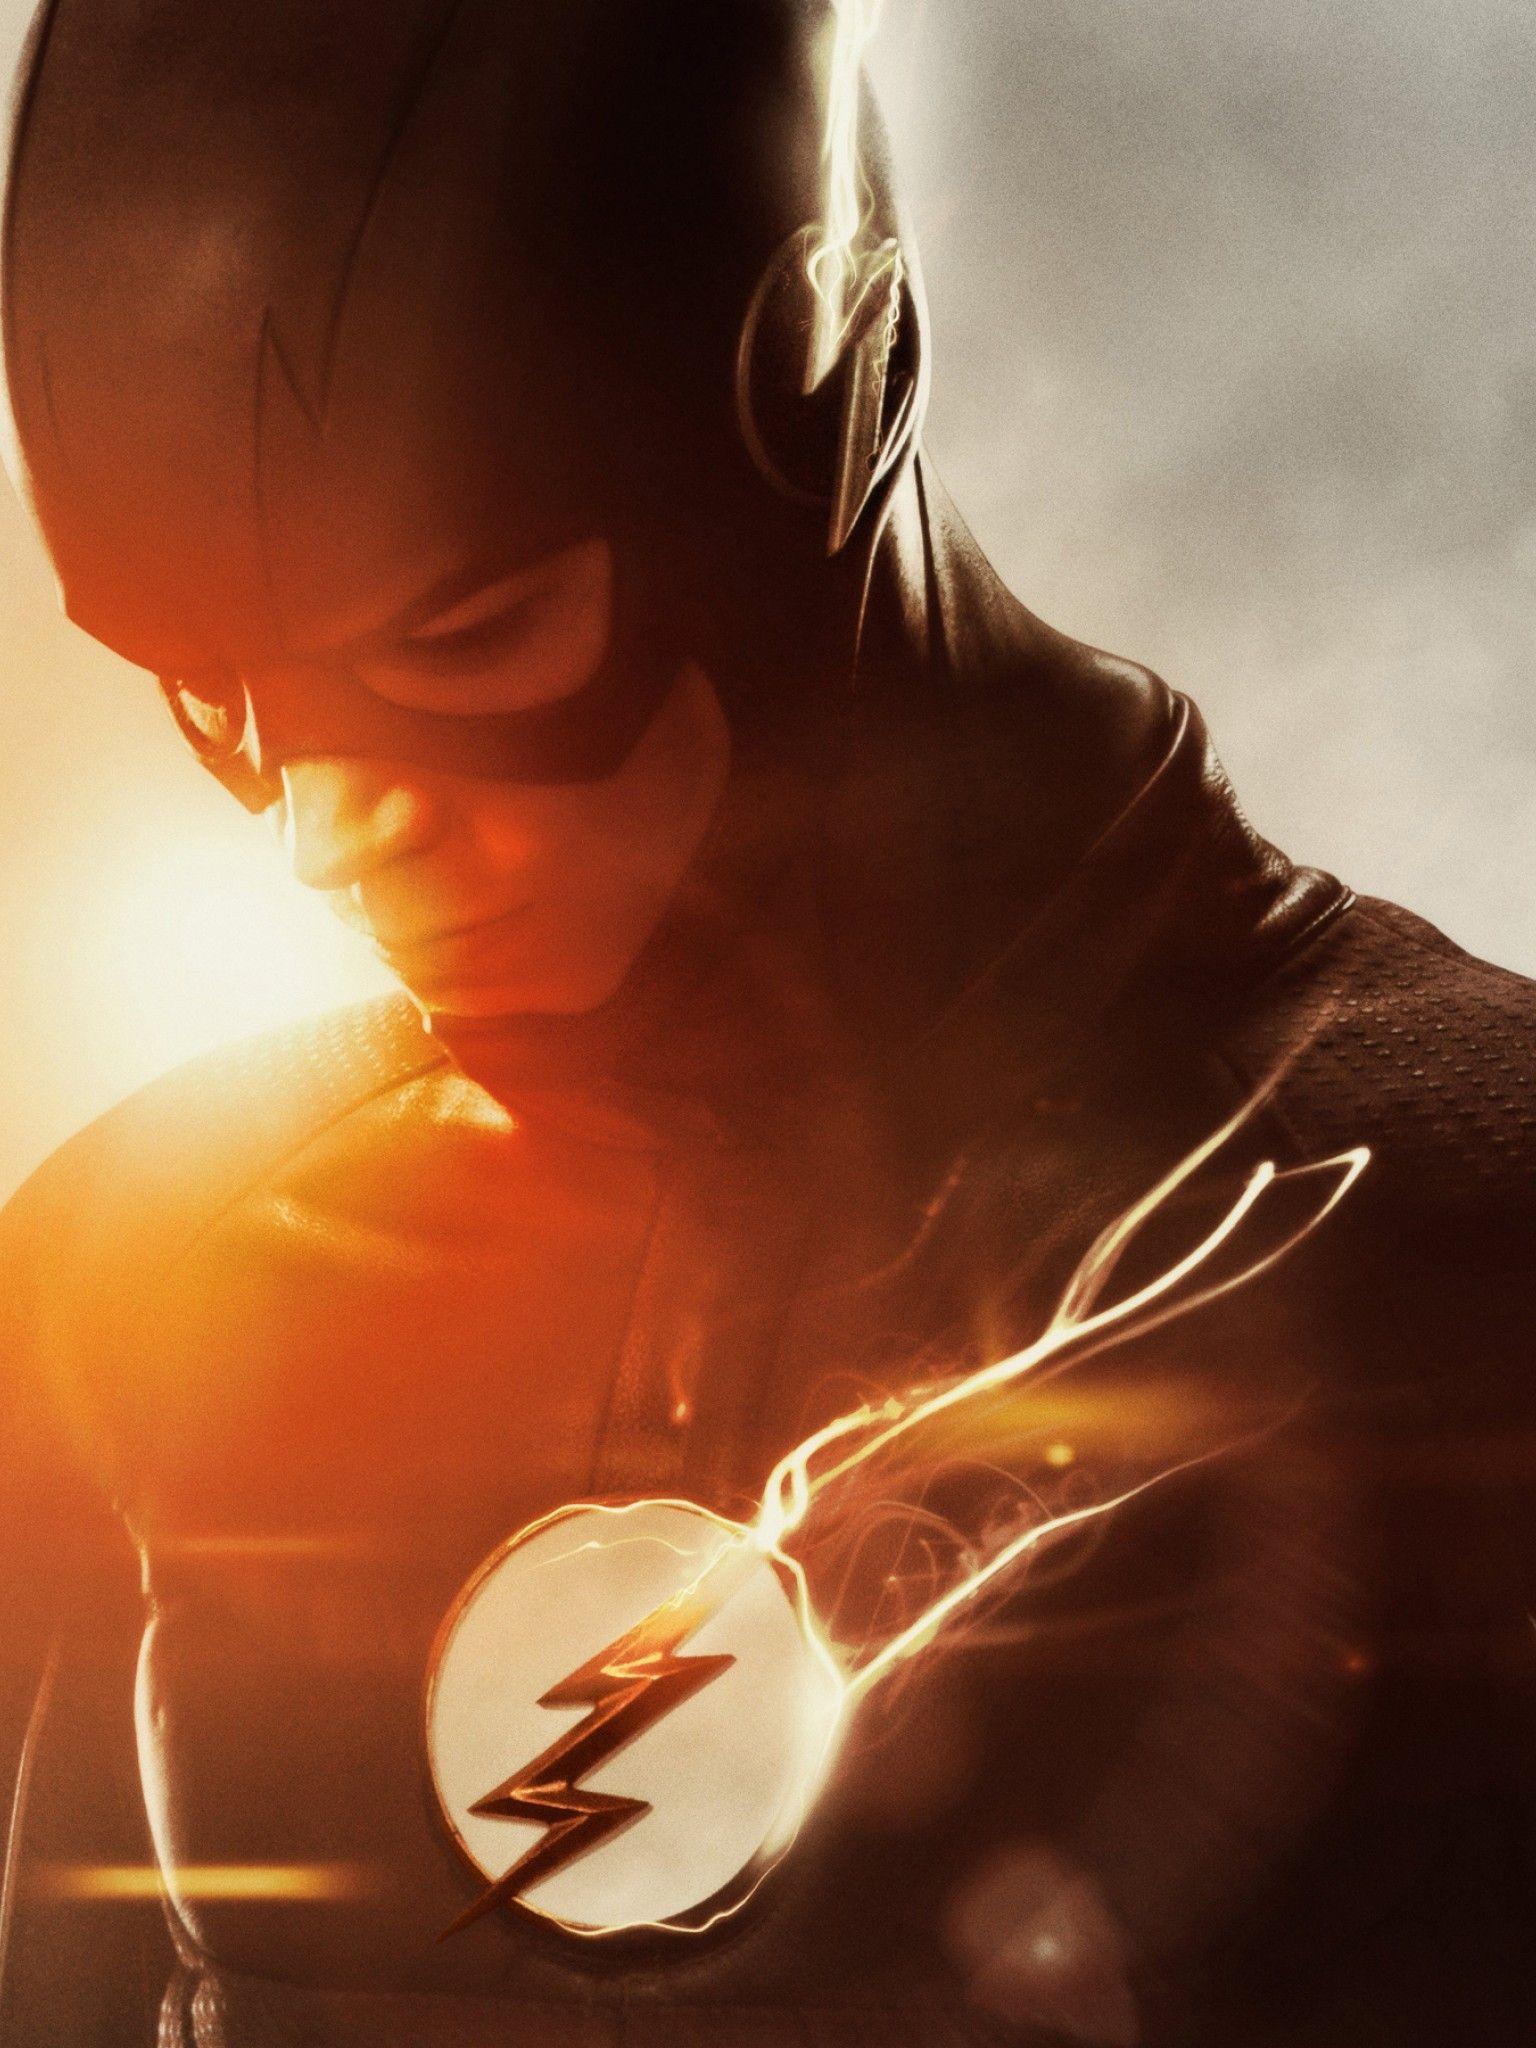 The Flash Season 2 Wallpaper with HD resolution